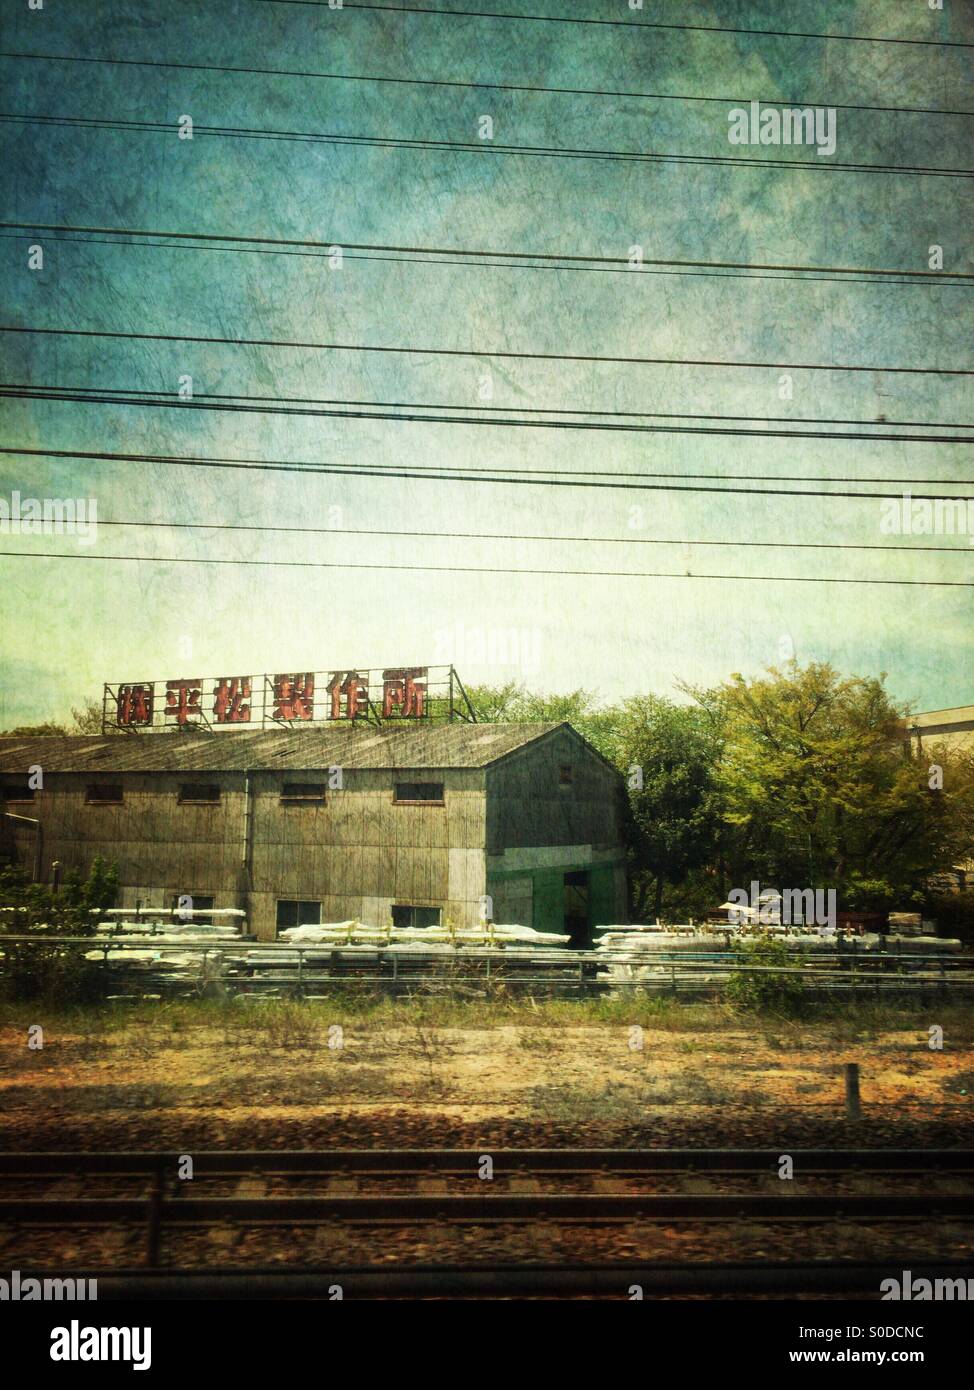 Hiramatsu Seisakujo, manufacturer of machinery parts in Nagoya, Japan. View from Shinkansen or bullet train window. Vintage paper texture overlay. Stock Photo